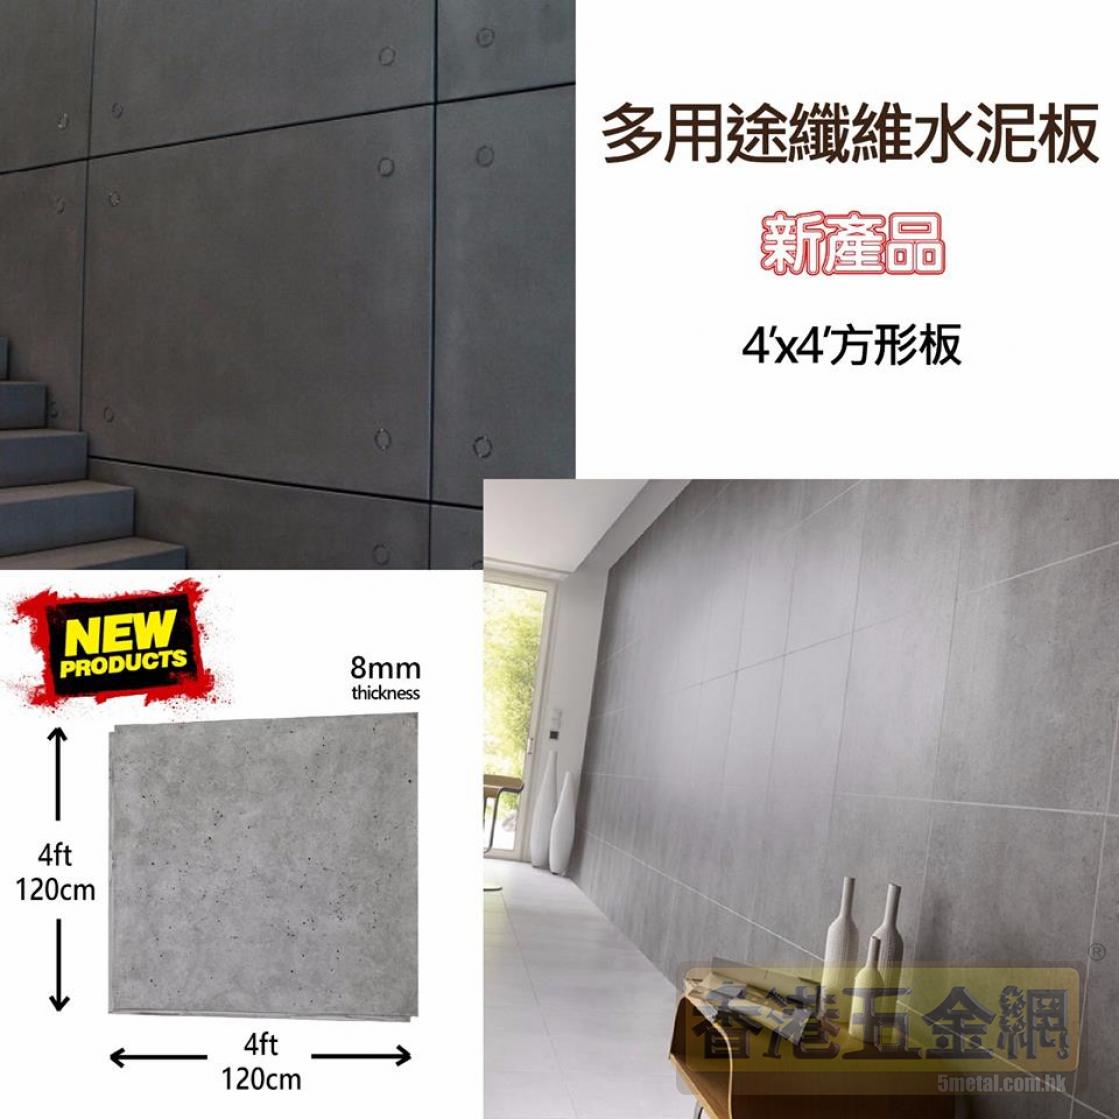 Kimbo-Durit-Board-4x4尺高級環保水泥纖維防火板-適用於地板-牆身-外牆-隔間-室內裝飾-耐火板-防火間隔板-辦公室隔板-隔板牆-分隔板-間隔板-防火牆建材-阻燃板-纖維水泥板Fiber-Cement-Board非石棉防火板可加防水功能變防火防水板